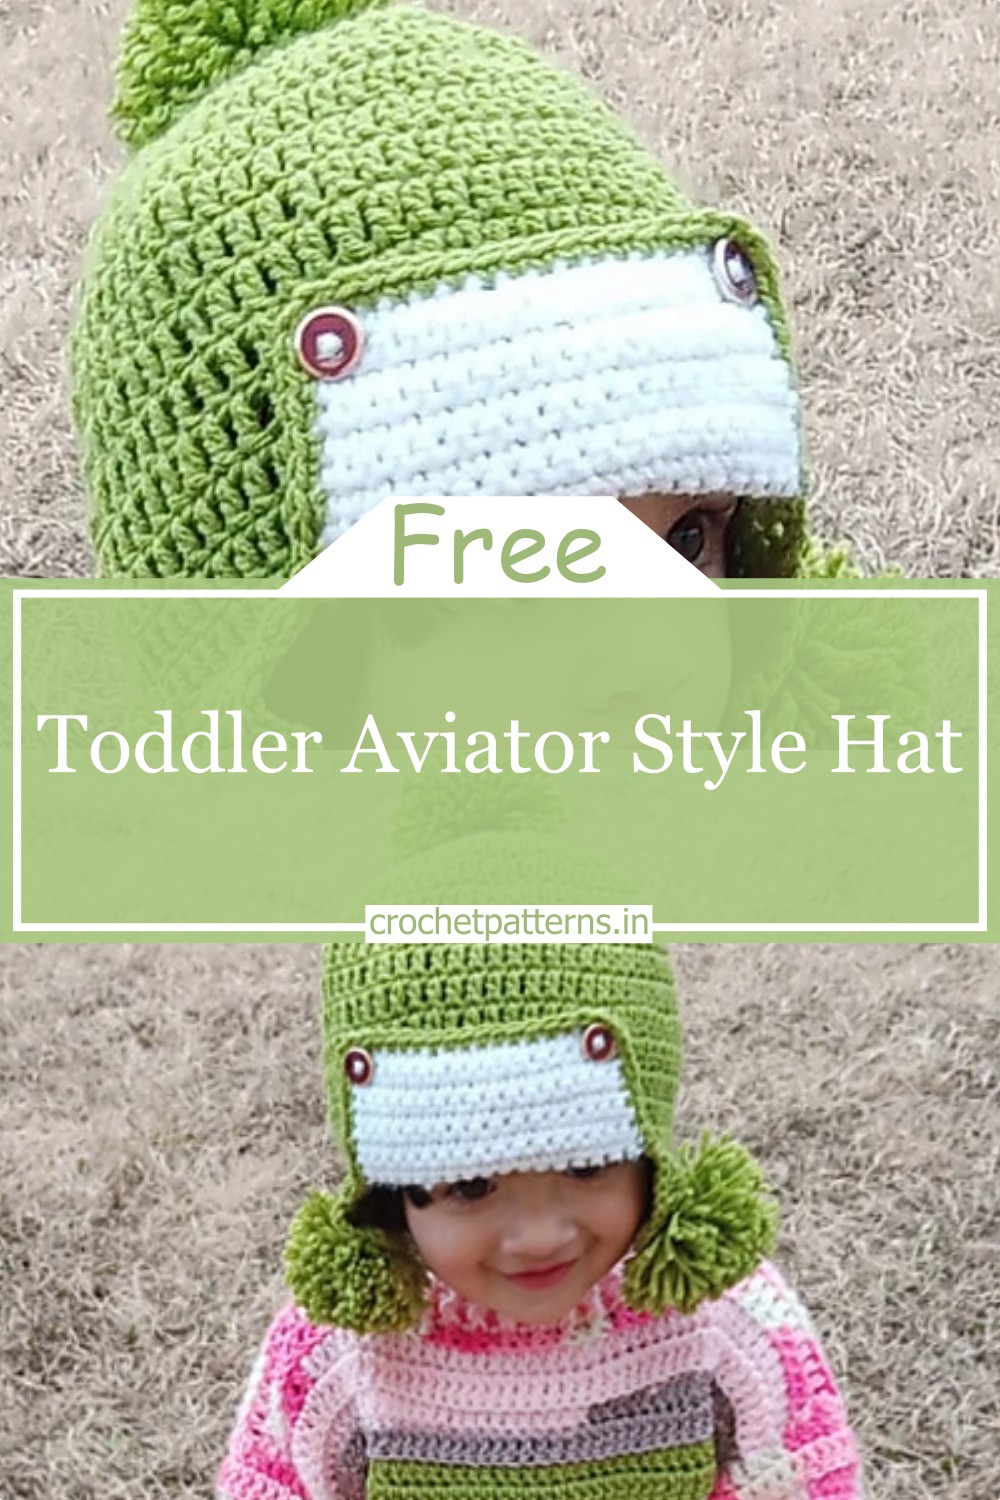 Toddler Aviator Style Hat